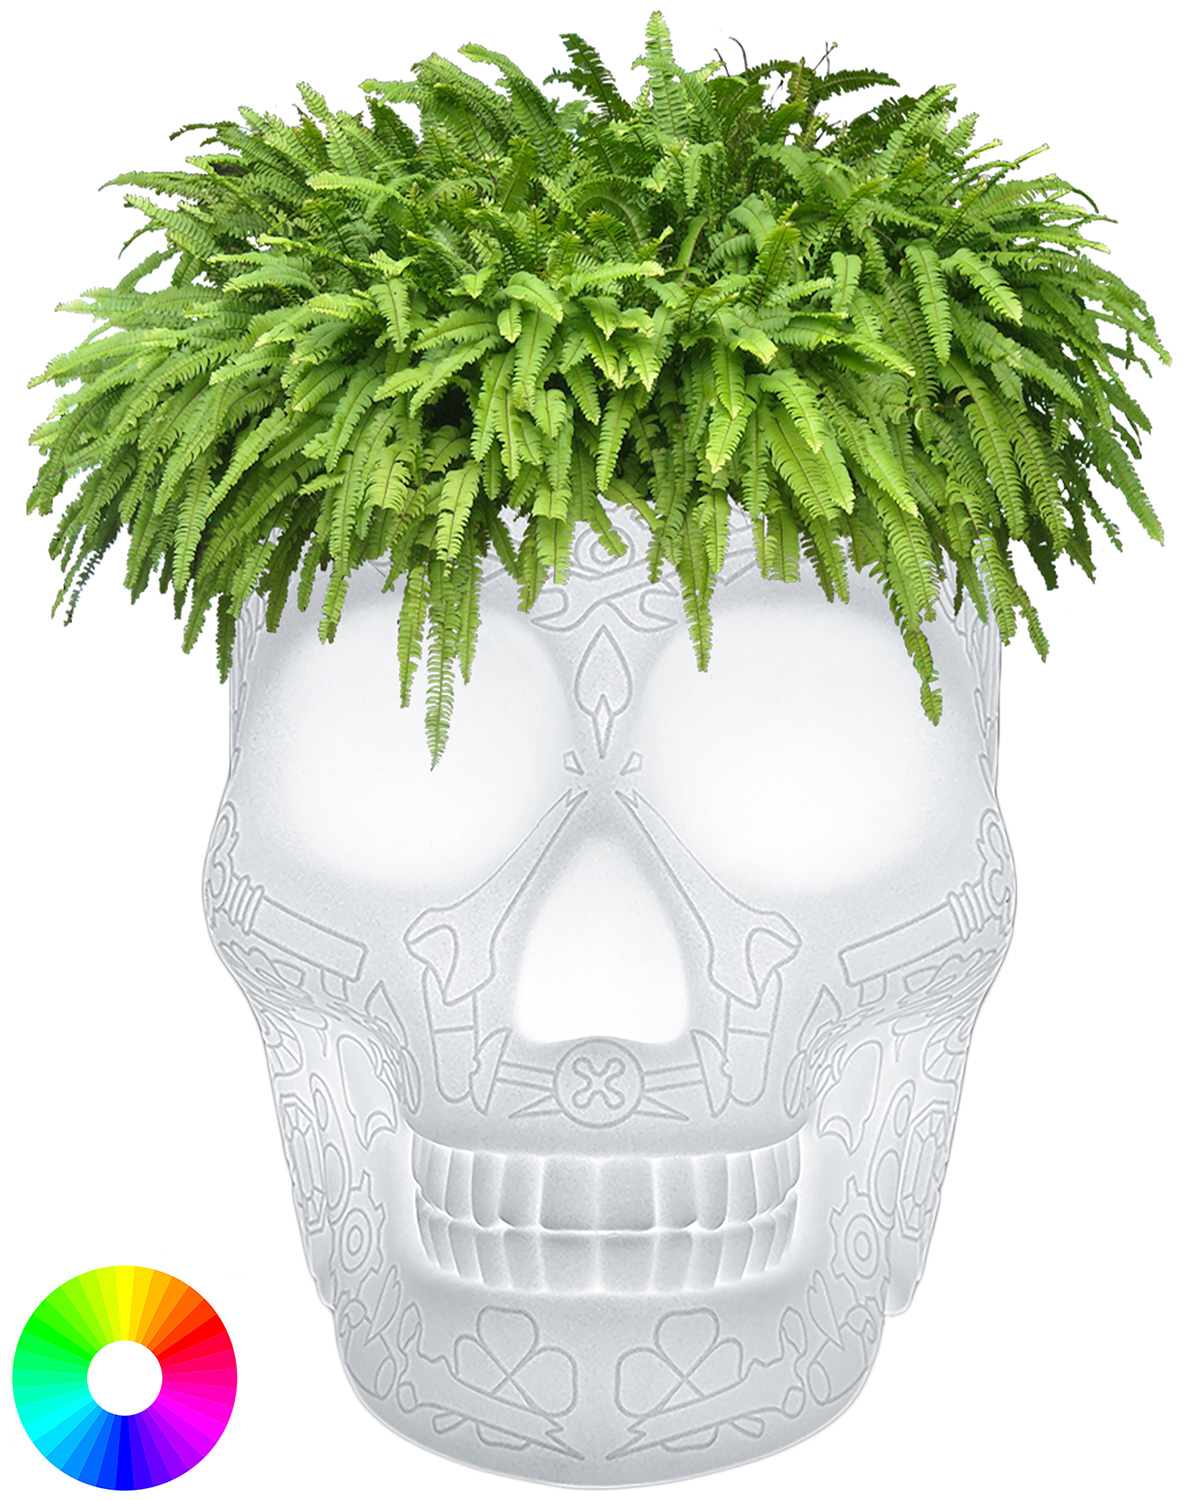 Qeeboo: Kabellose LED-Designerlampe / Pflanzkübel 'Mexican Skull' mit Farbwechsel - Design Studio Job